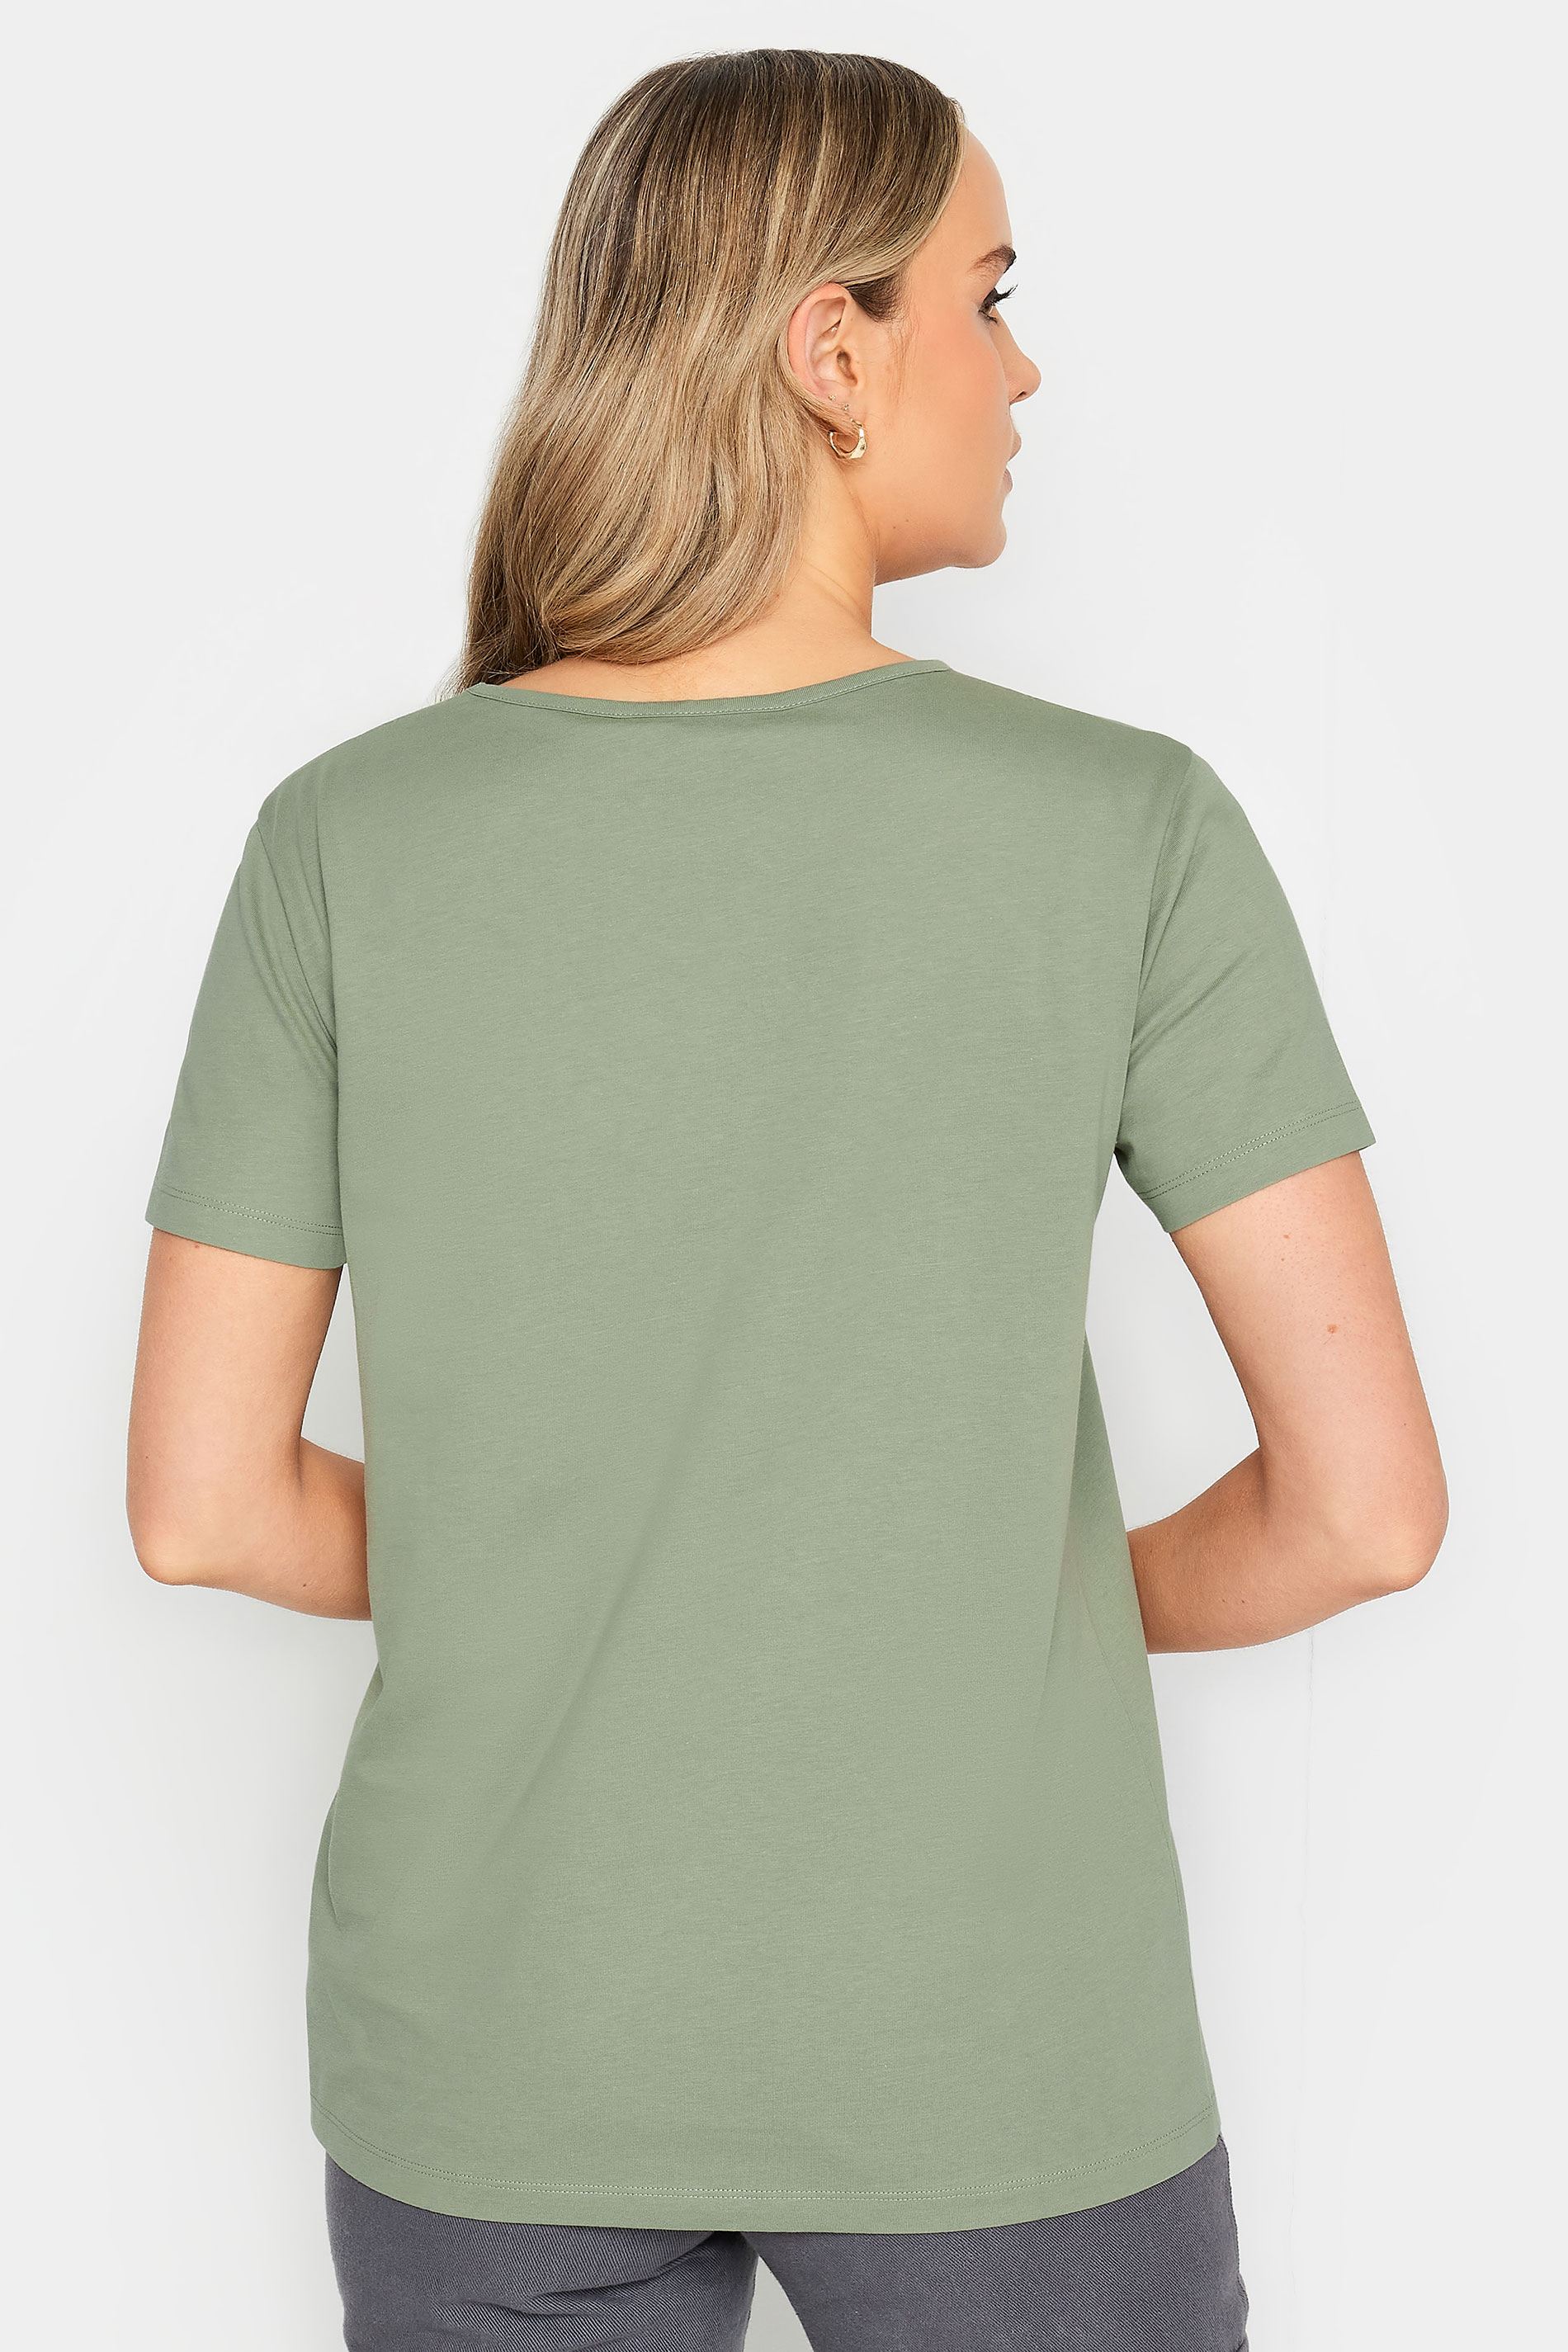 LTS Tall Sage Green 'New York' Print T-Shirt | Long Tall Sally  3